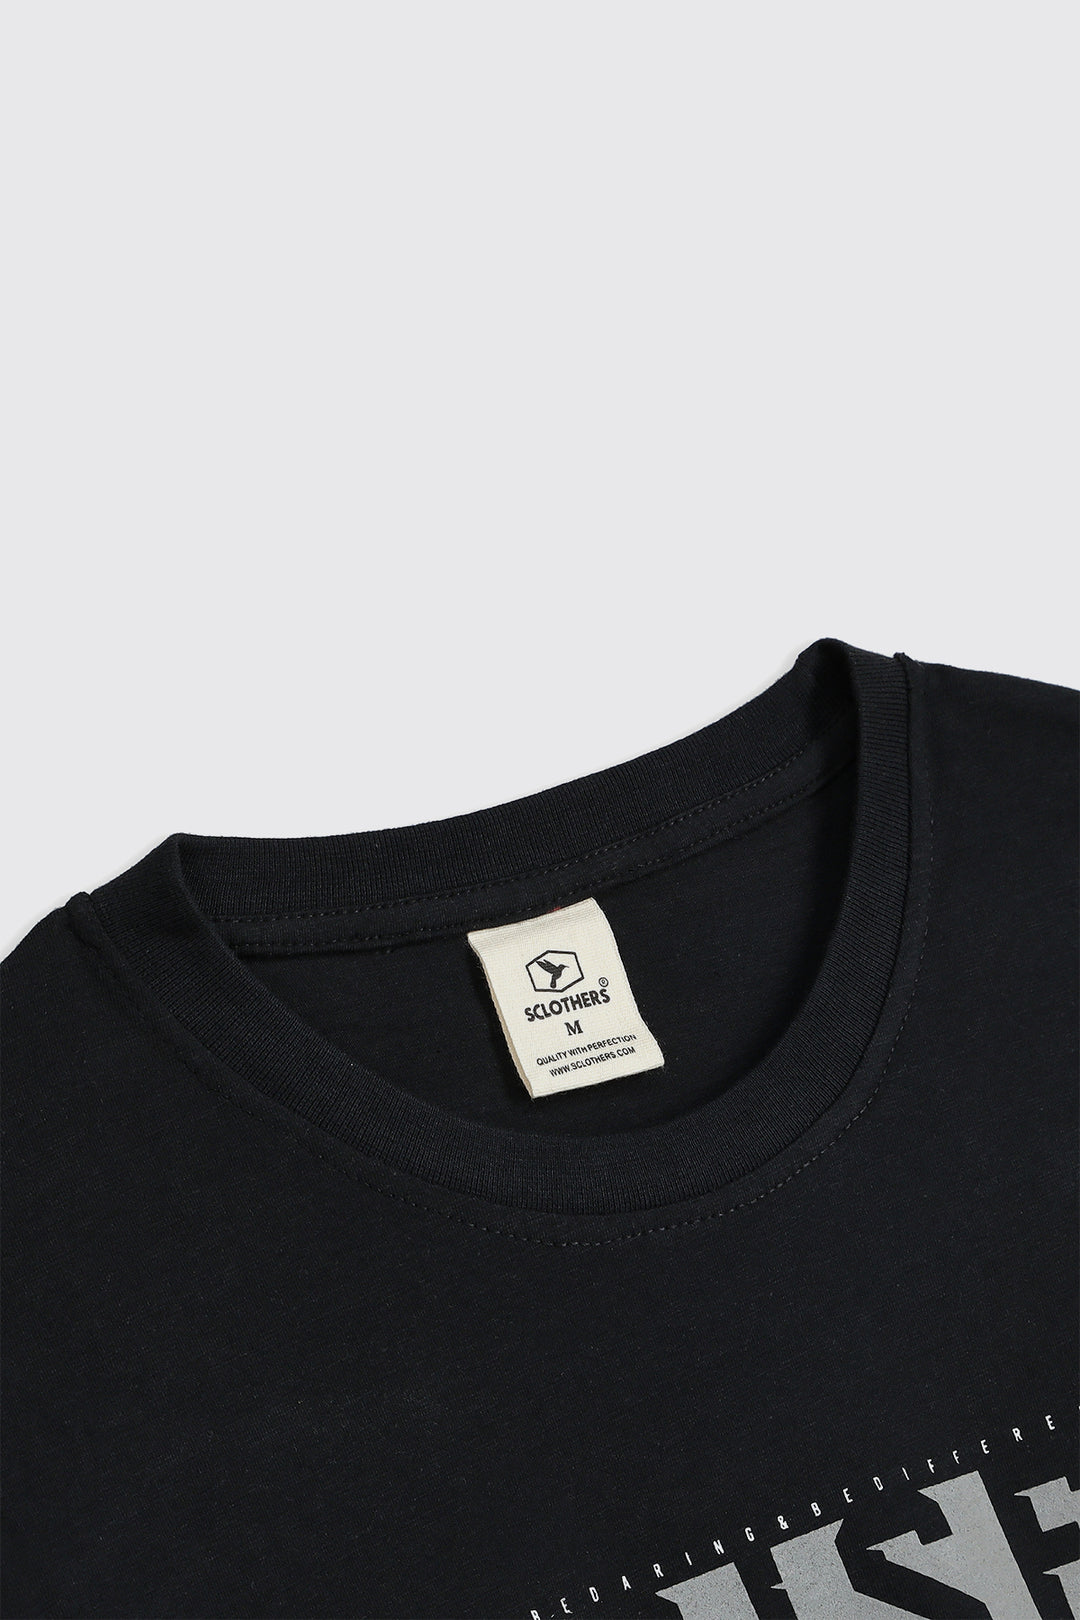 Rise Black & Brown Full Sleeve T-Shirt - W23 - MT0280R